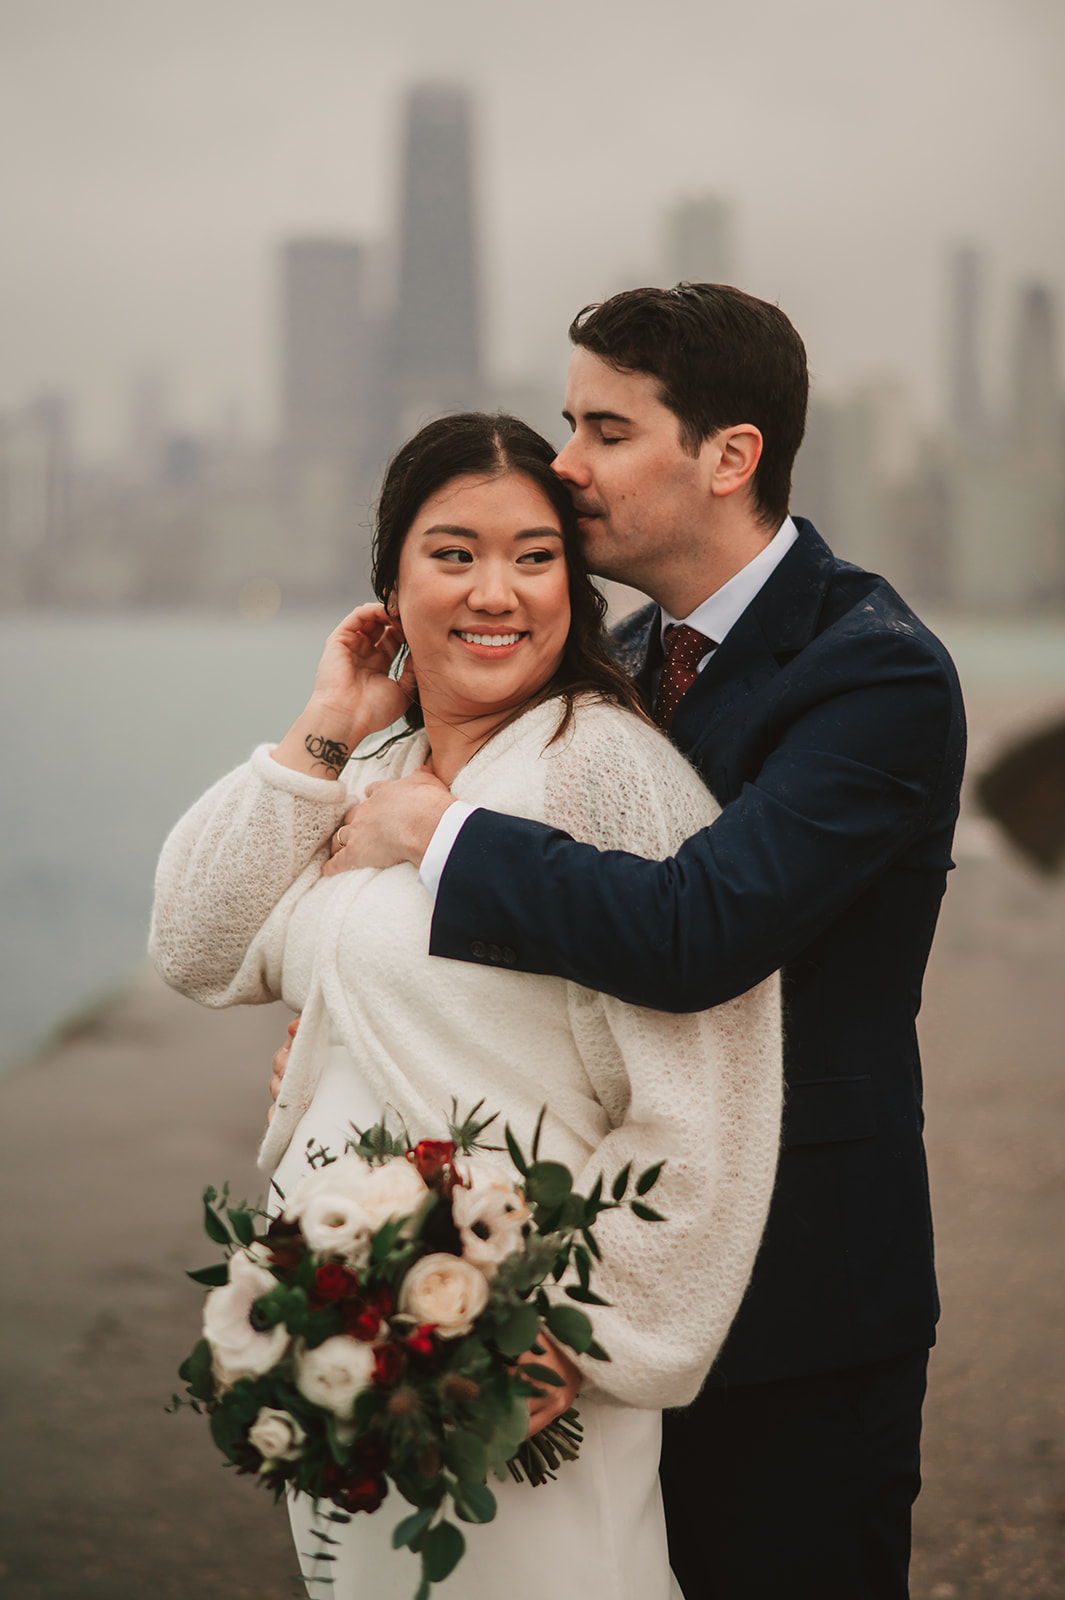 Intimate rainy day Chicago elopement wedding photography - Skyline over lake Michigan, couple cuddling